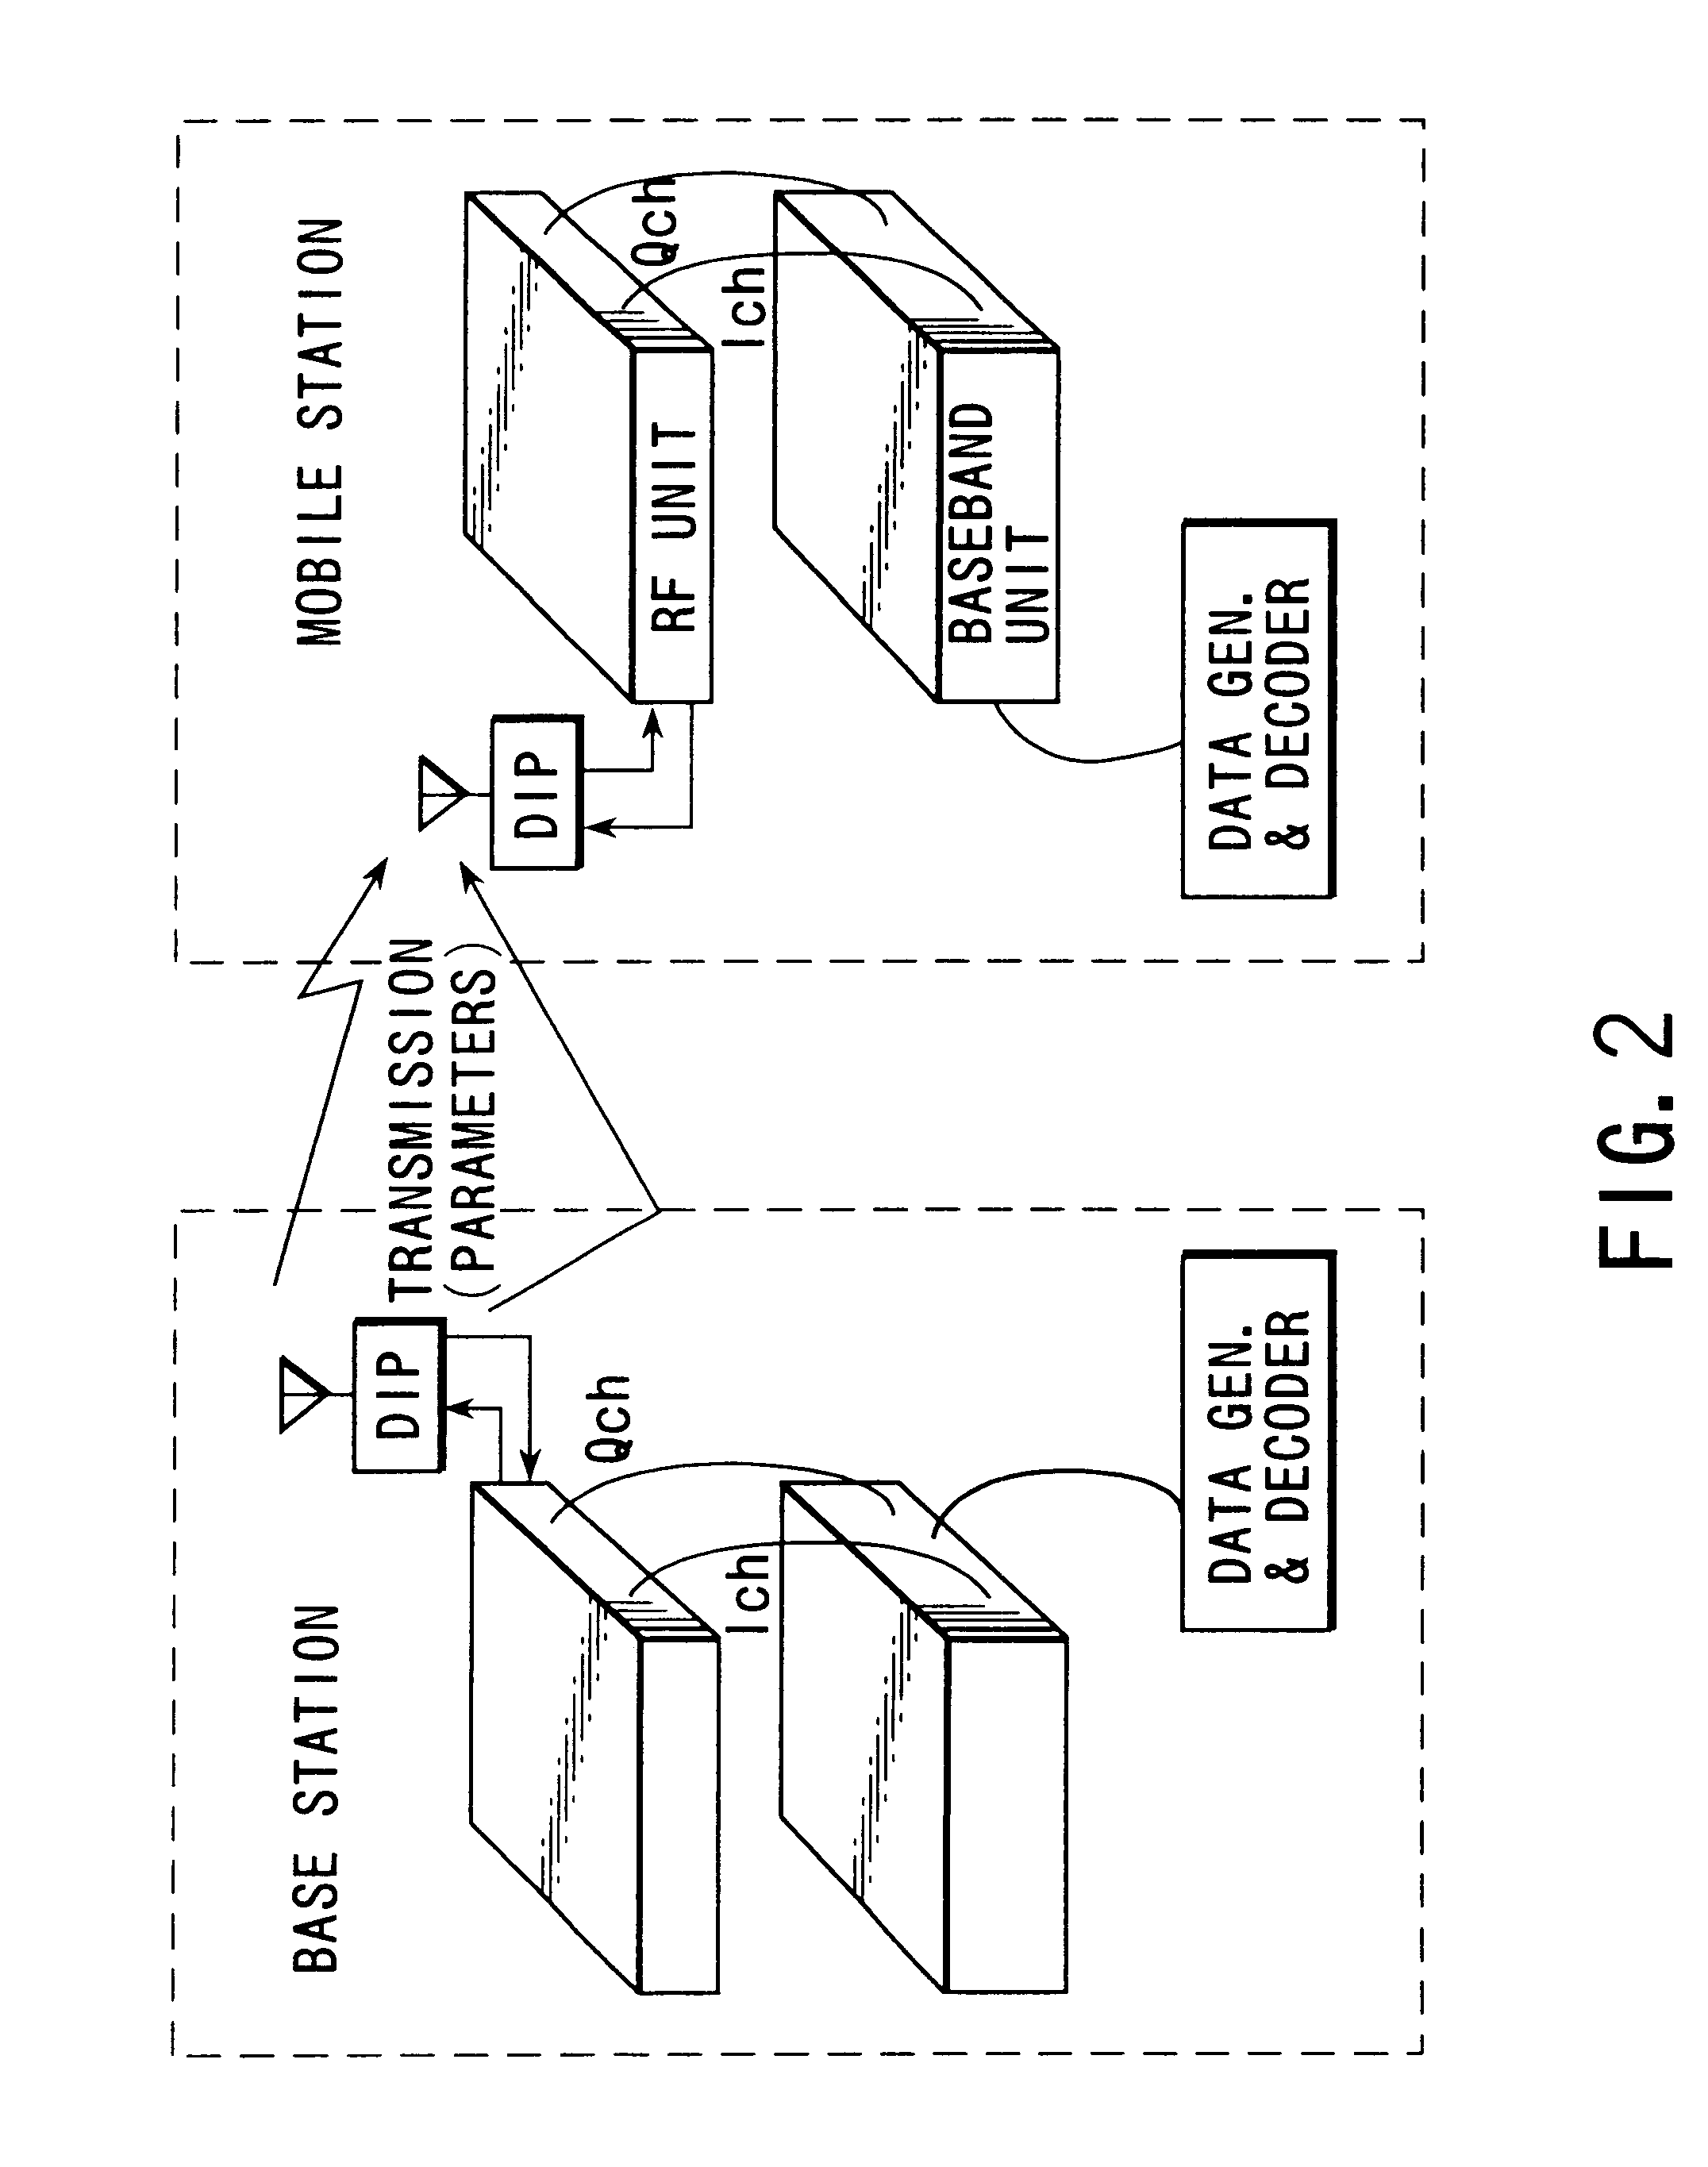 Multi-mode radio transmission system